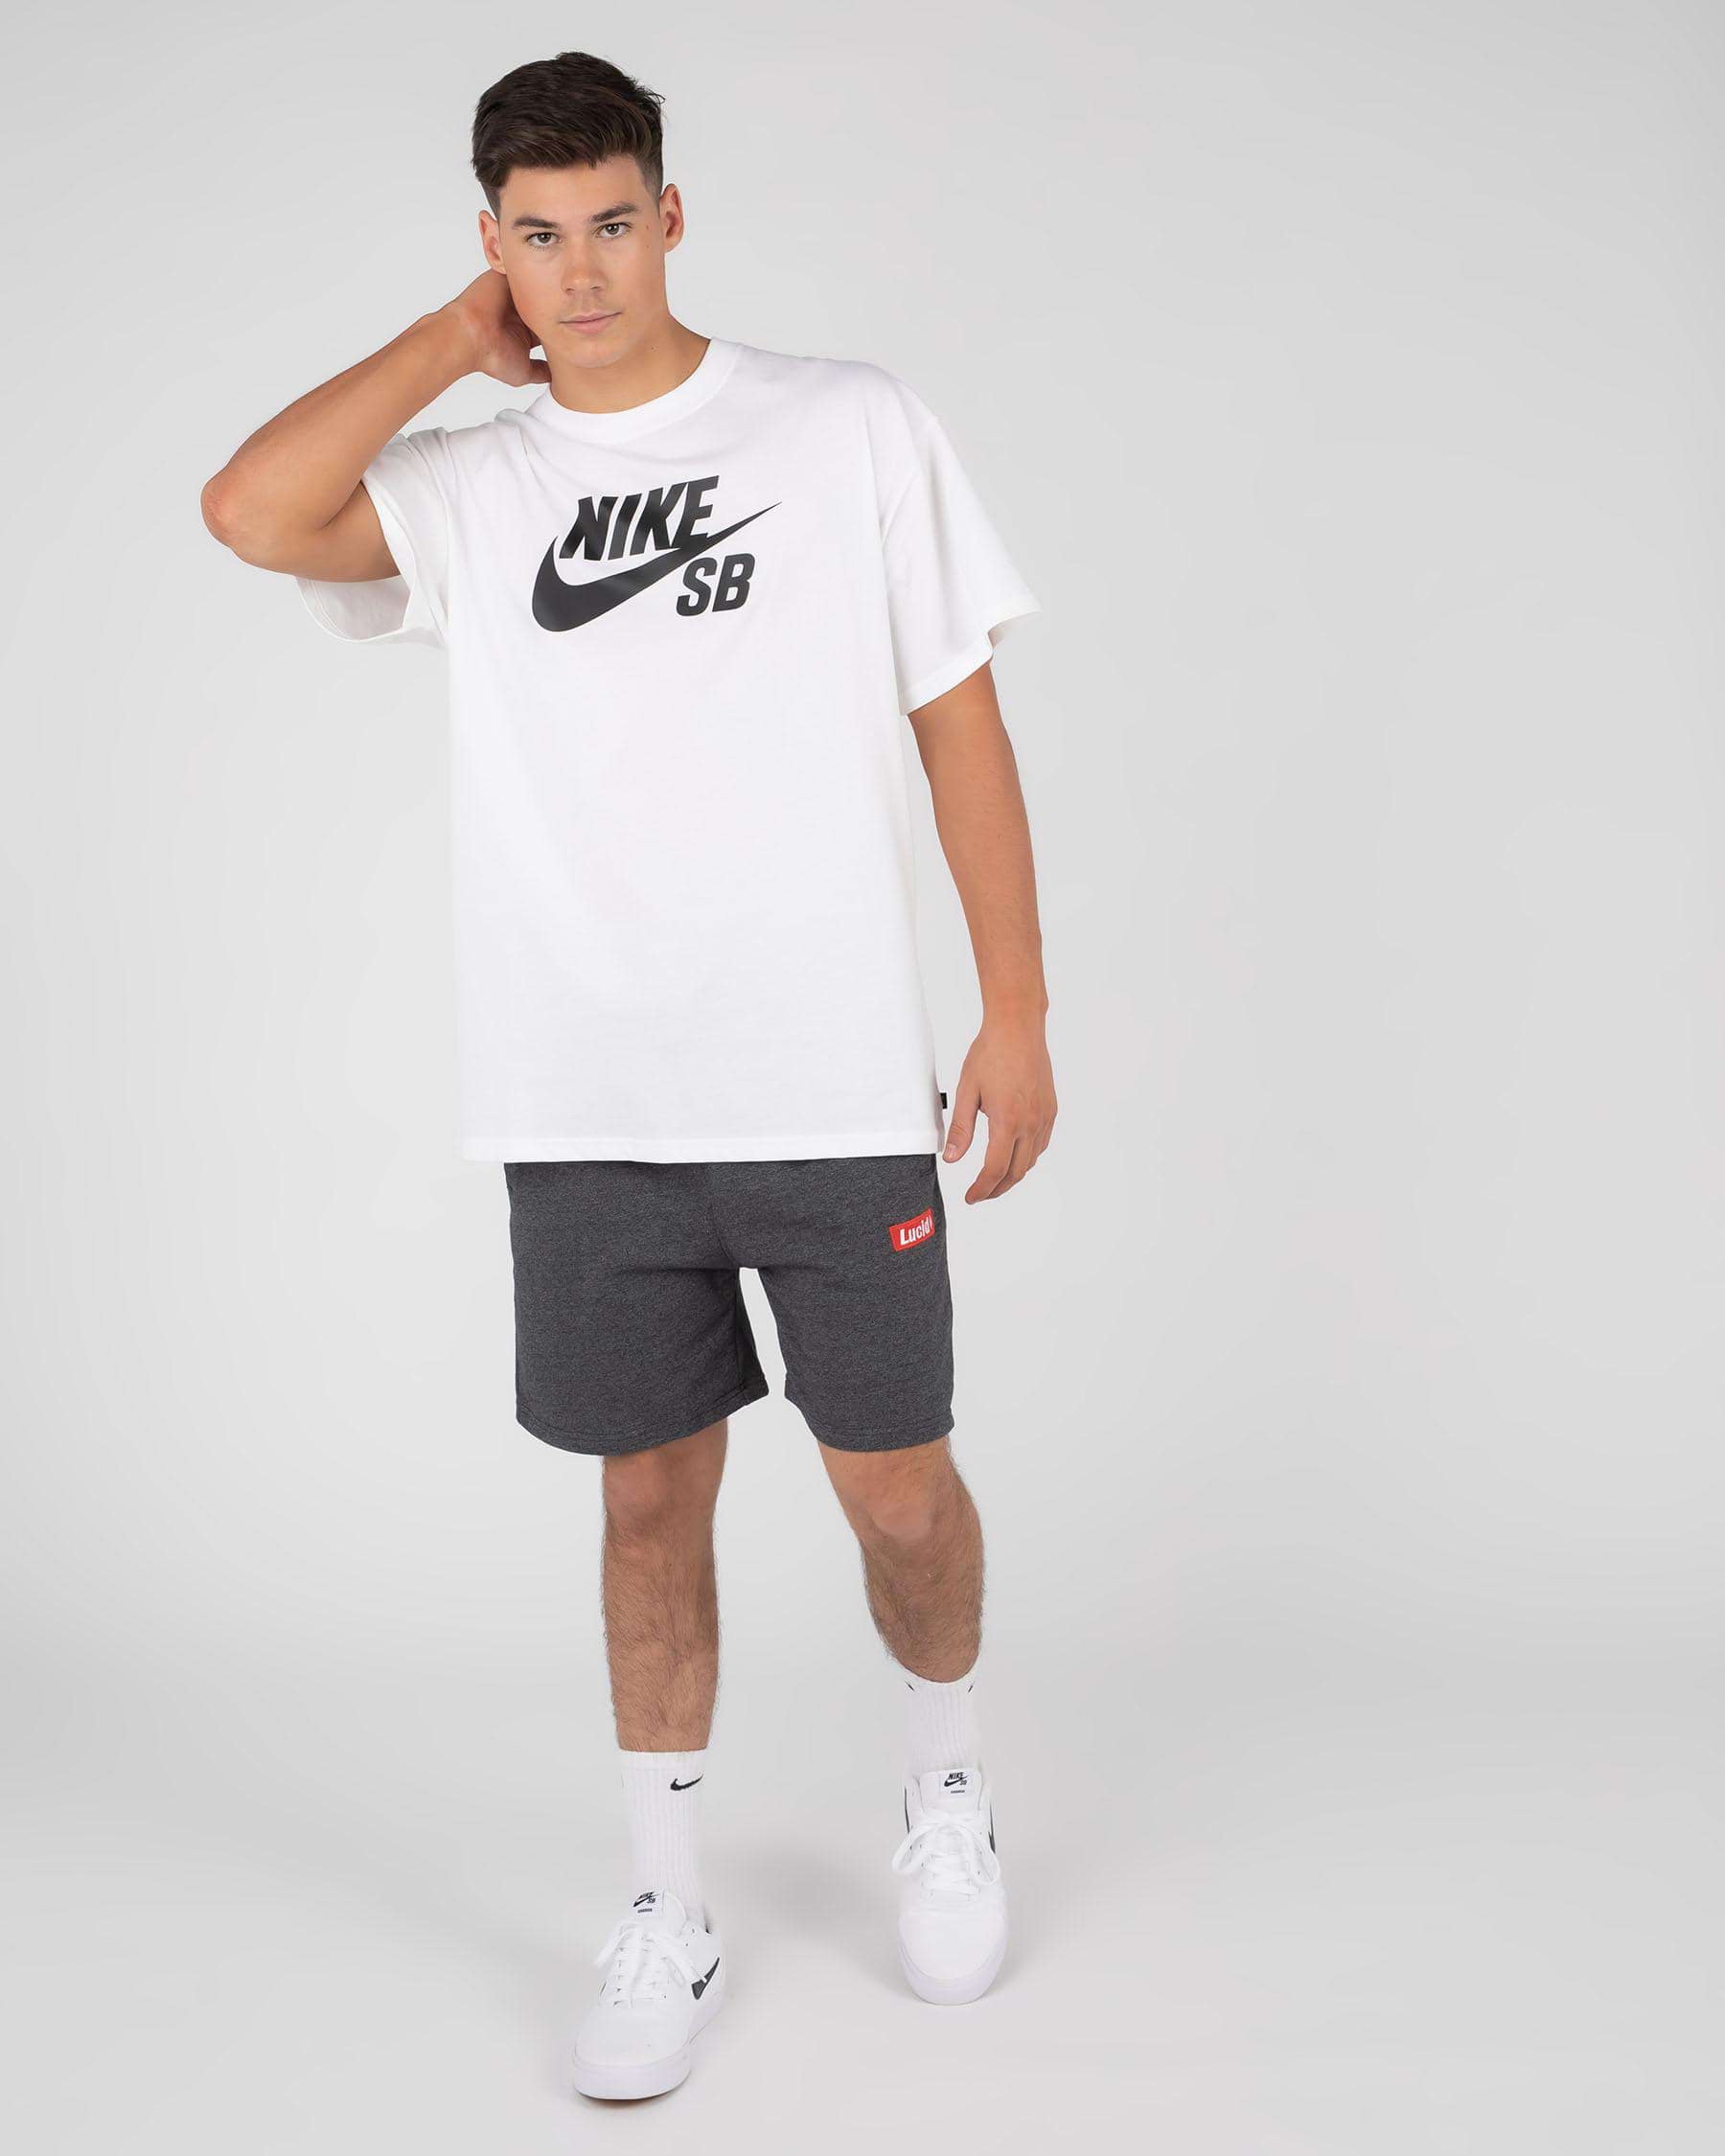 Shop Nike SB Logo T-Shirt In White - Fast Shipping & Easy Returns ...